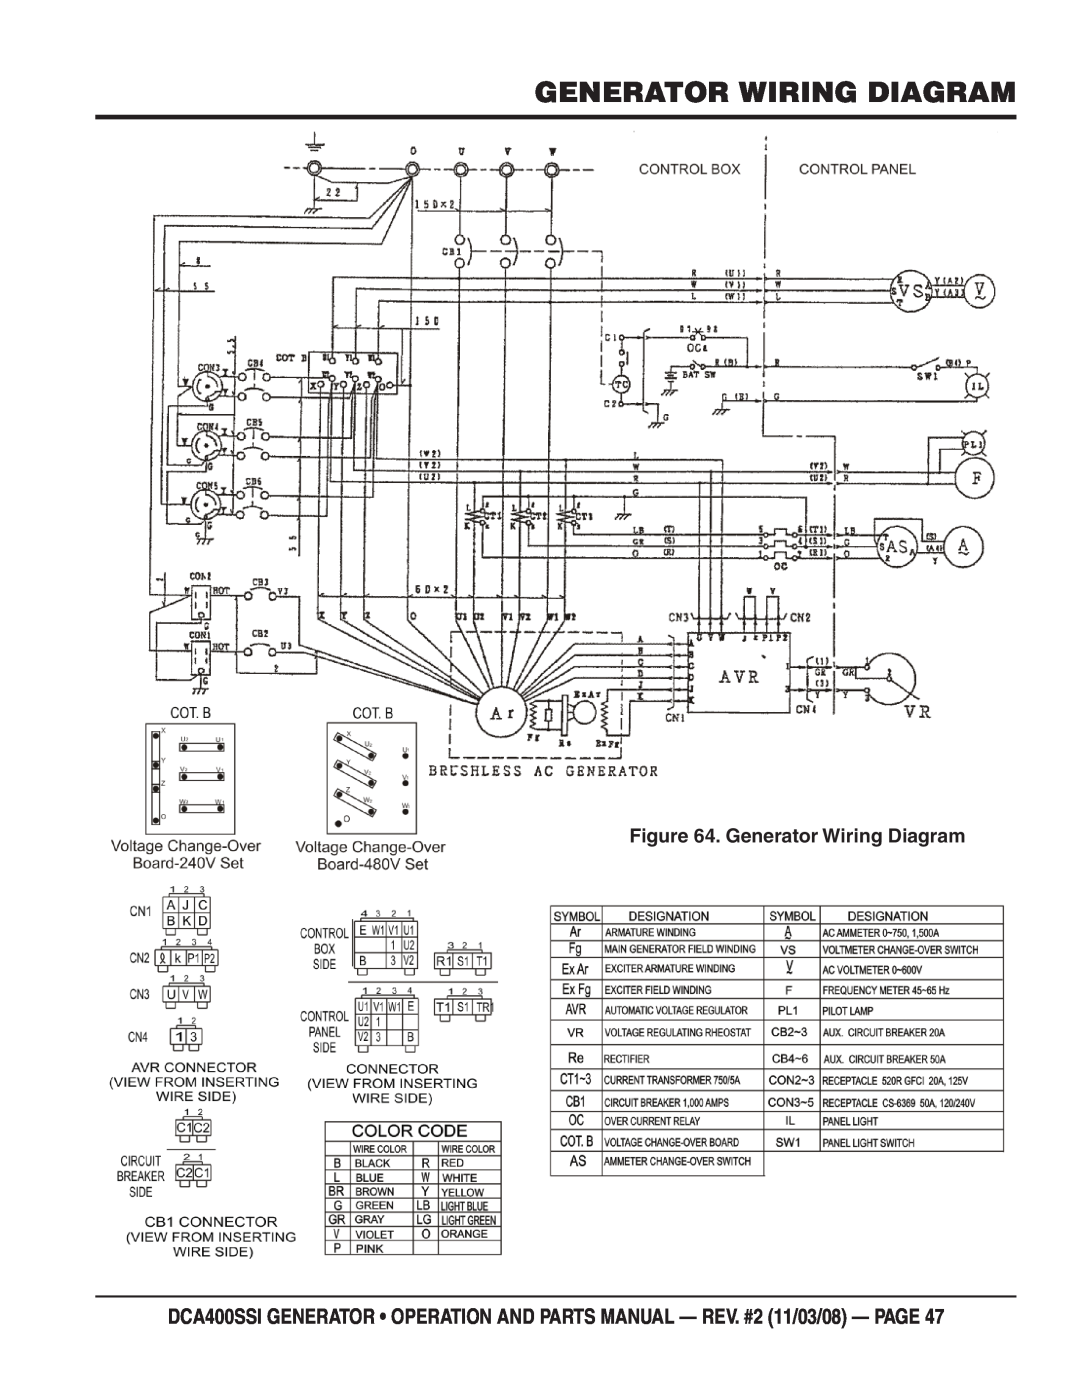 Multiquip DCA400SSI manual Generator Wiring Diagram 